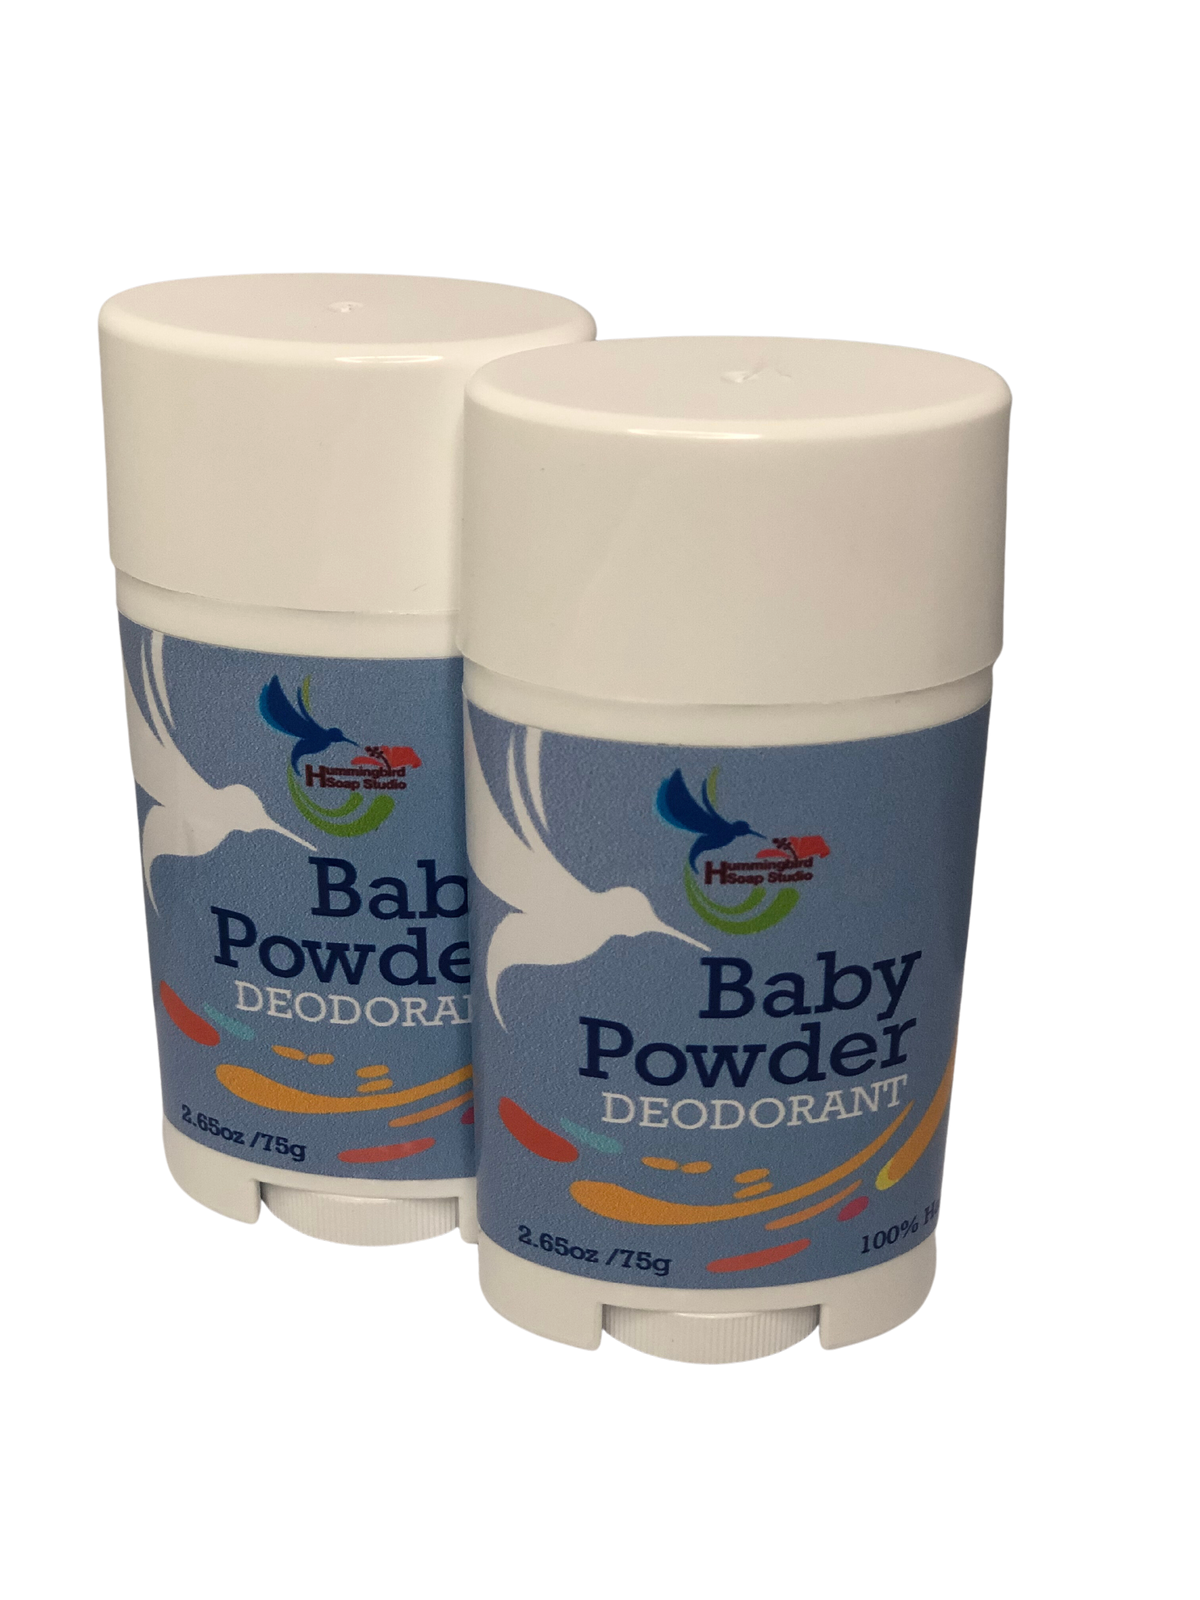 Baby Powder Deodorant